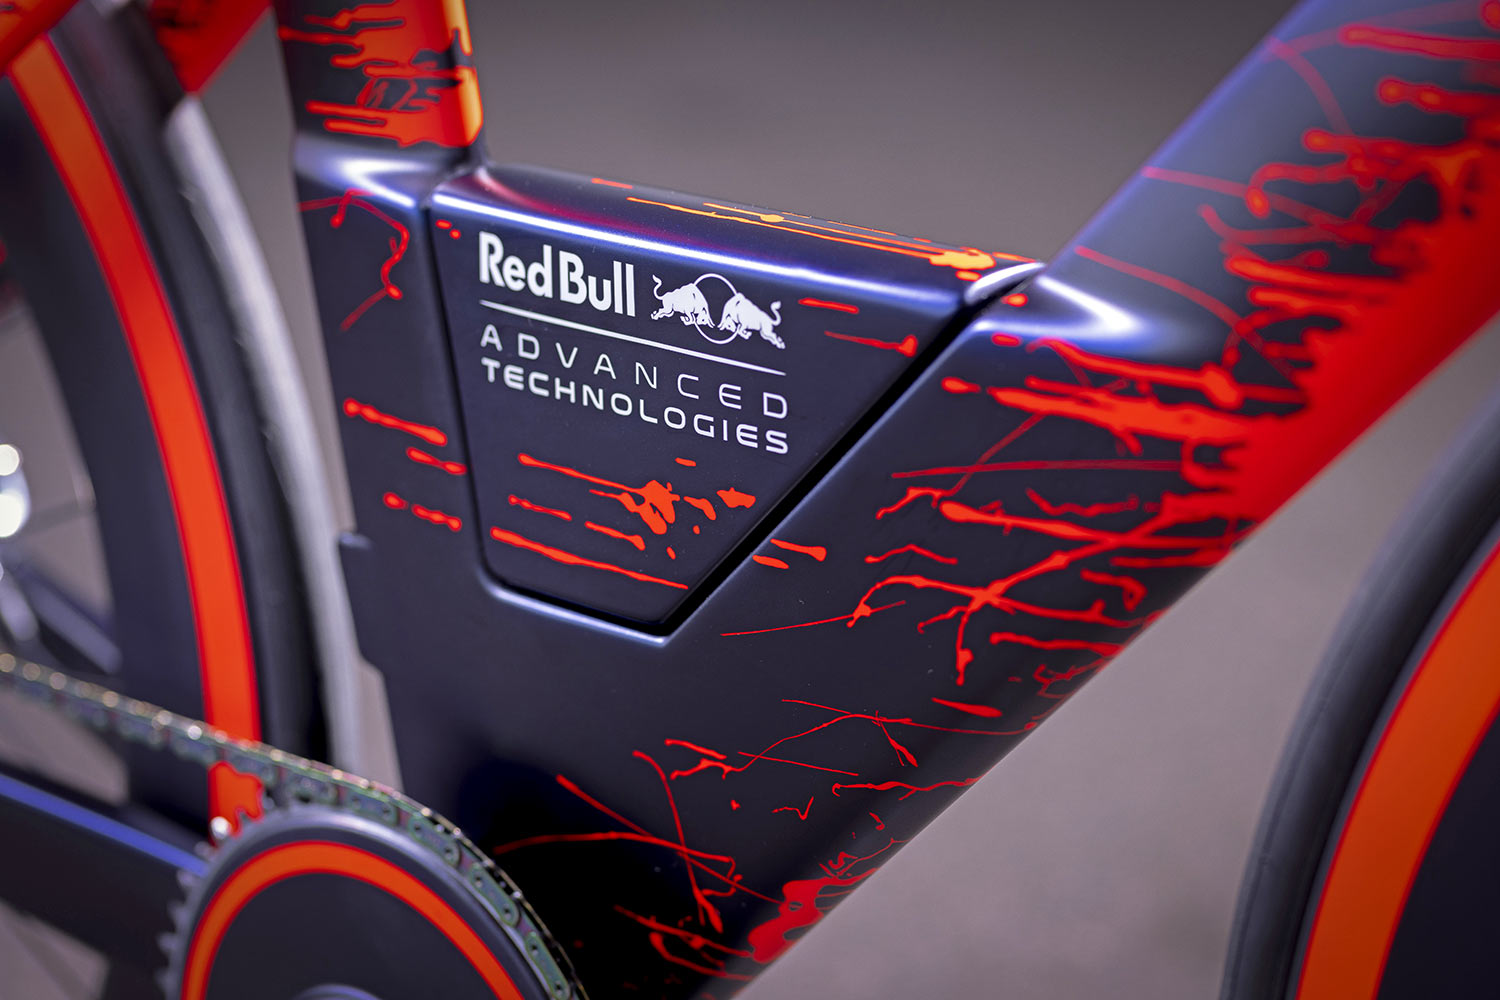 BMC Red Bull Speedmachine prototype, Worlds Fastest Race Bike time trial triathlon, Red Bull Advance Technologies lab